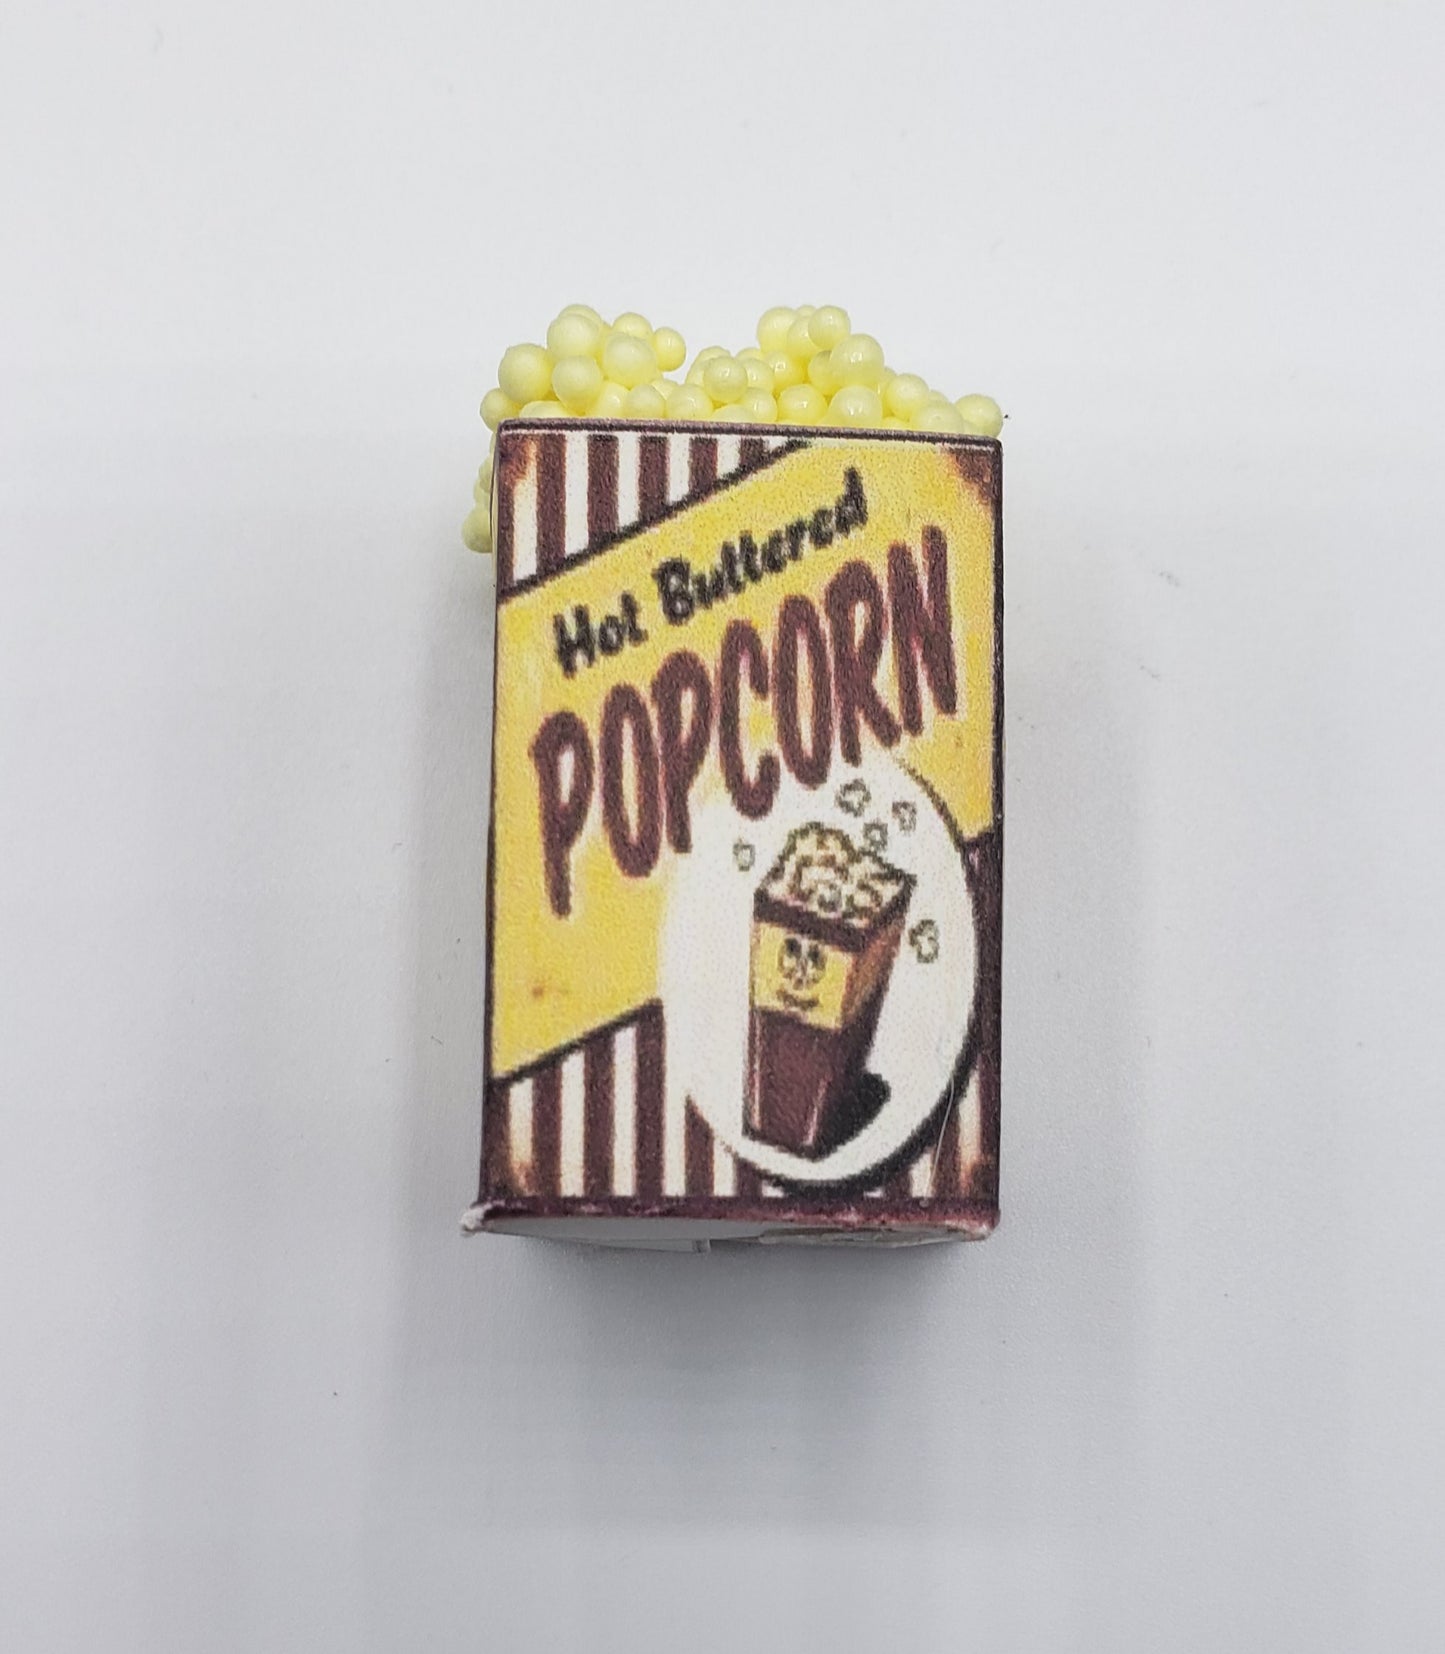 Large popcorn box